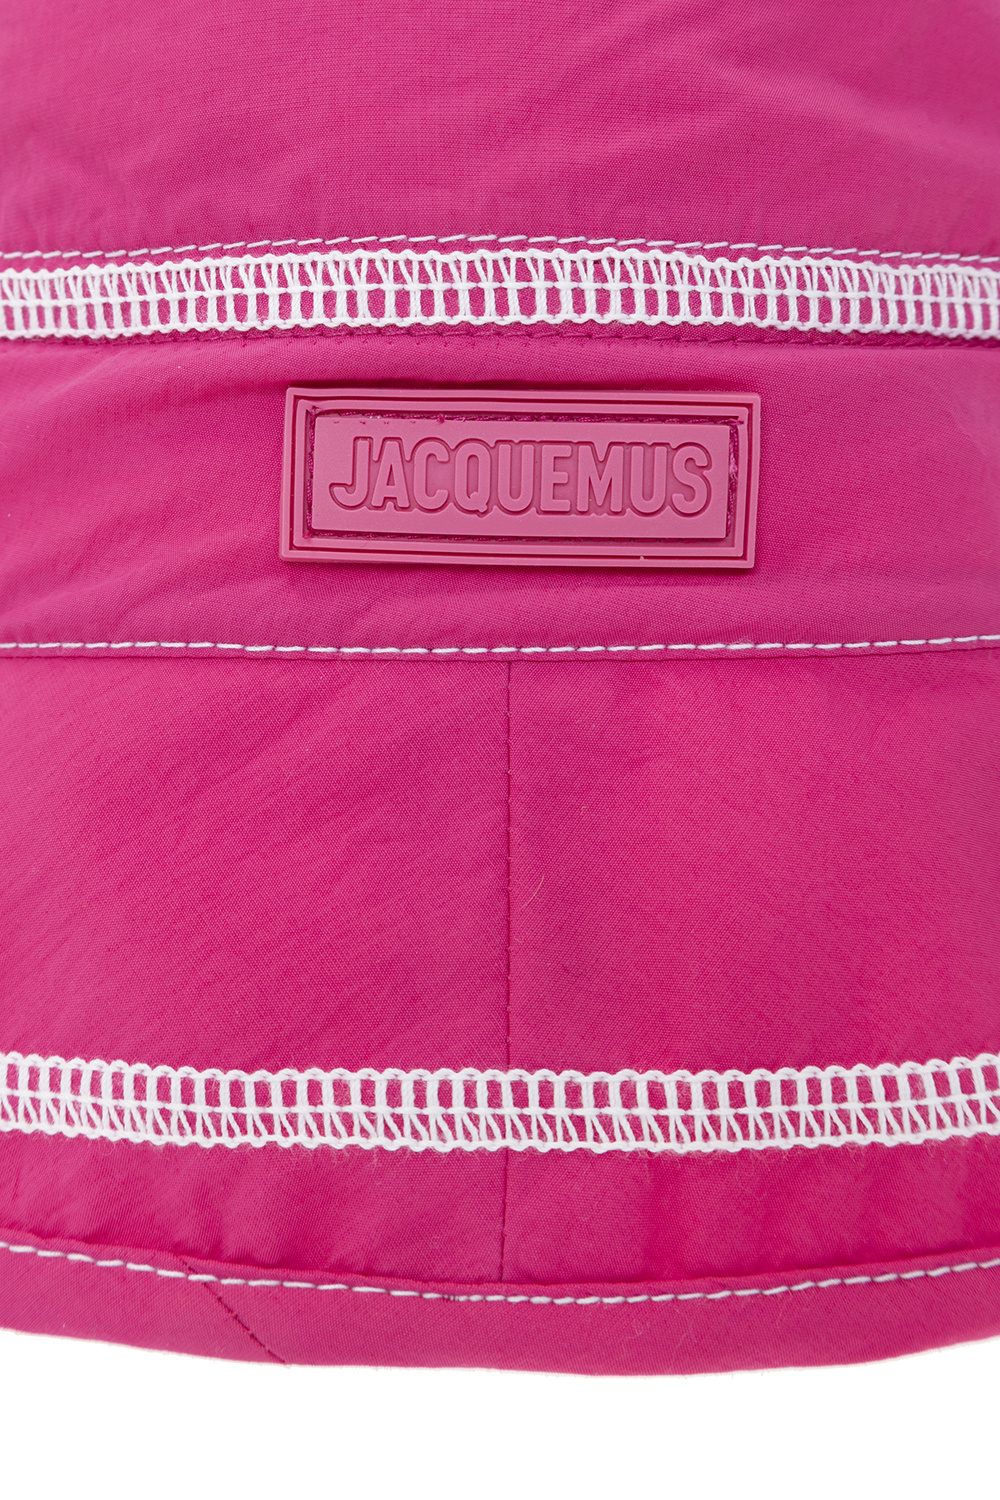 Jacquemus key-chains clothing phone-accessories usb caps